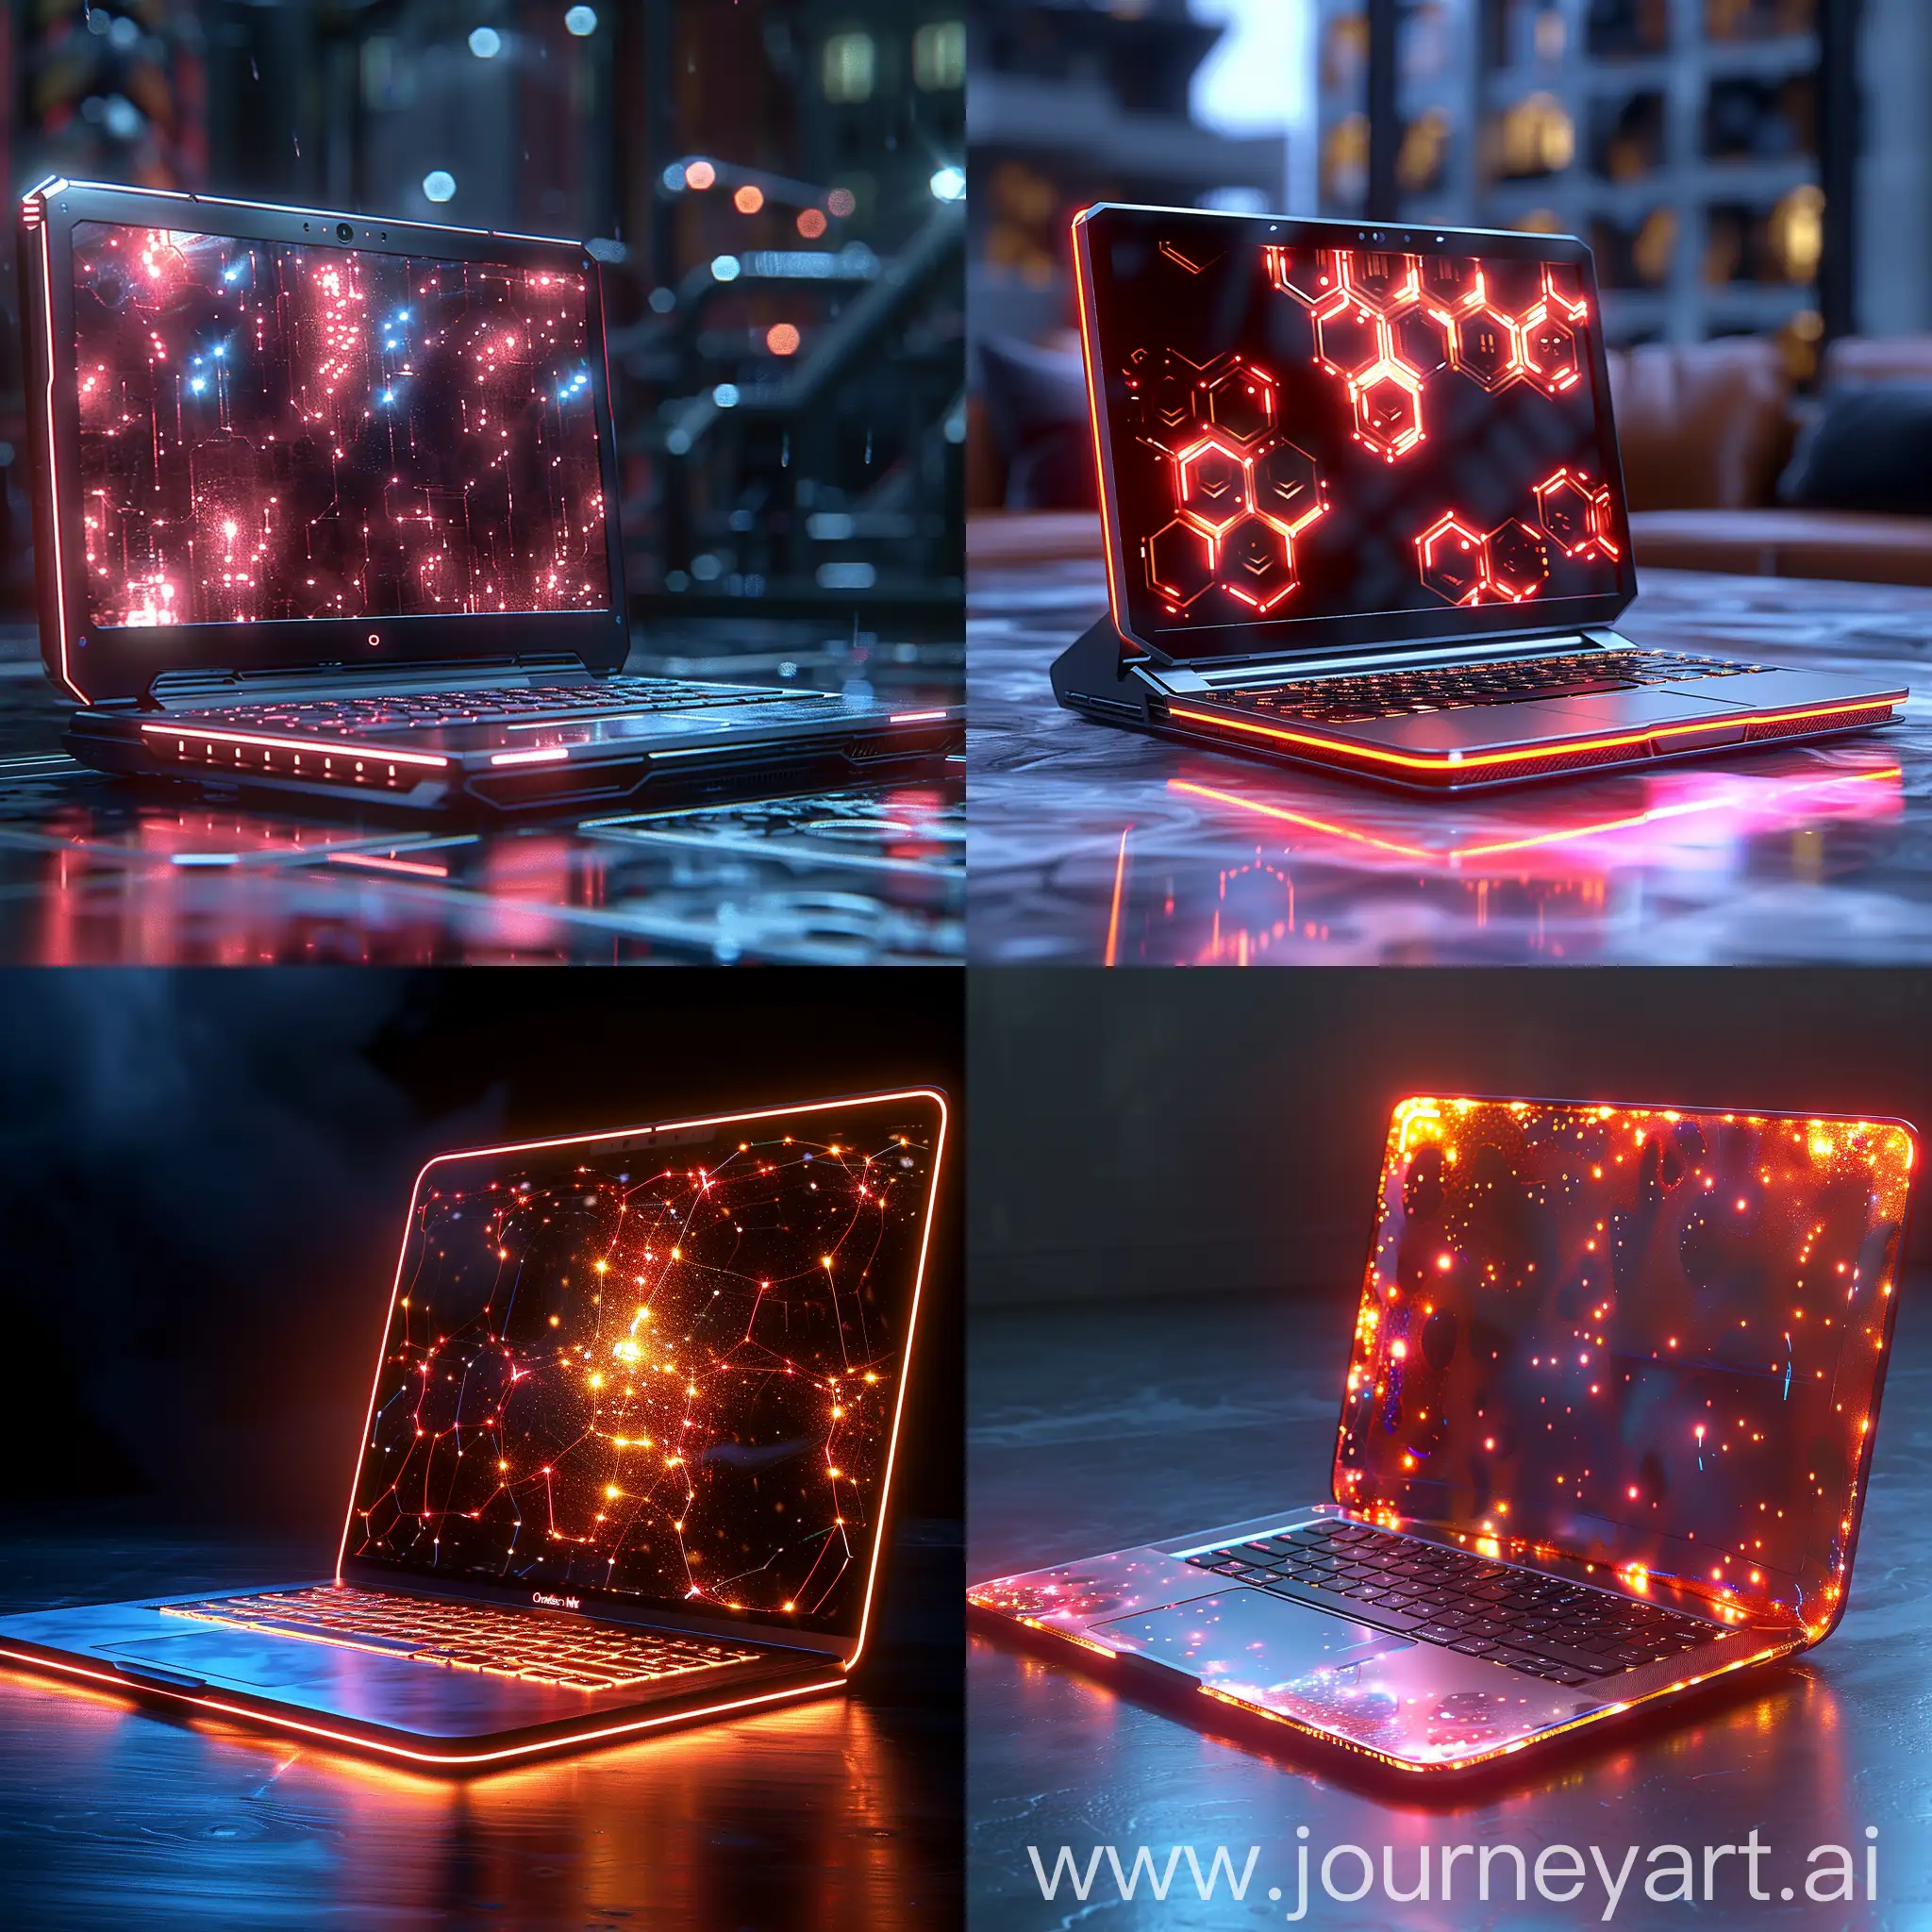 Futuristic-HighTech-Laptop-with-Glowing-Organic-LEDs